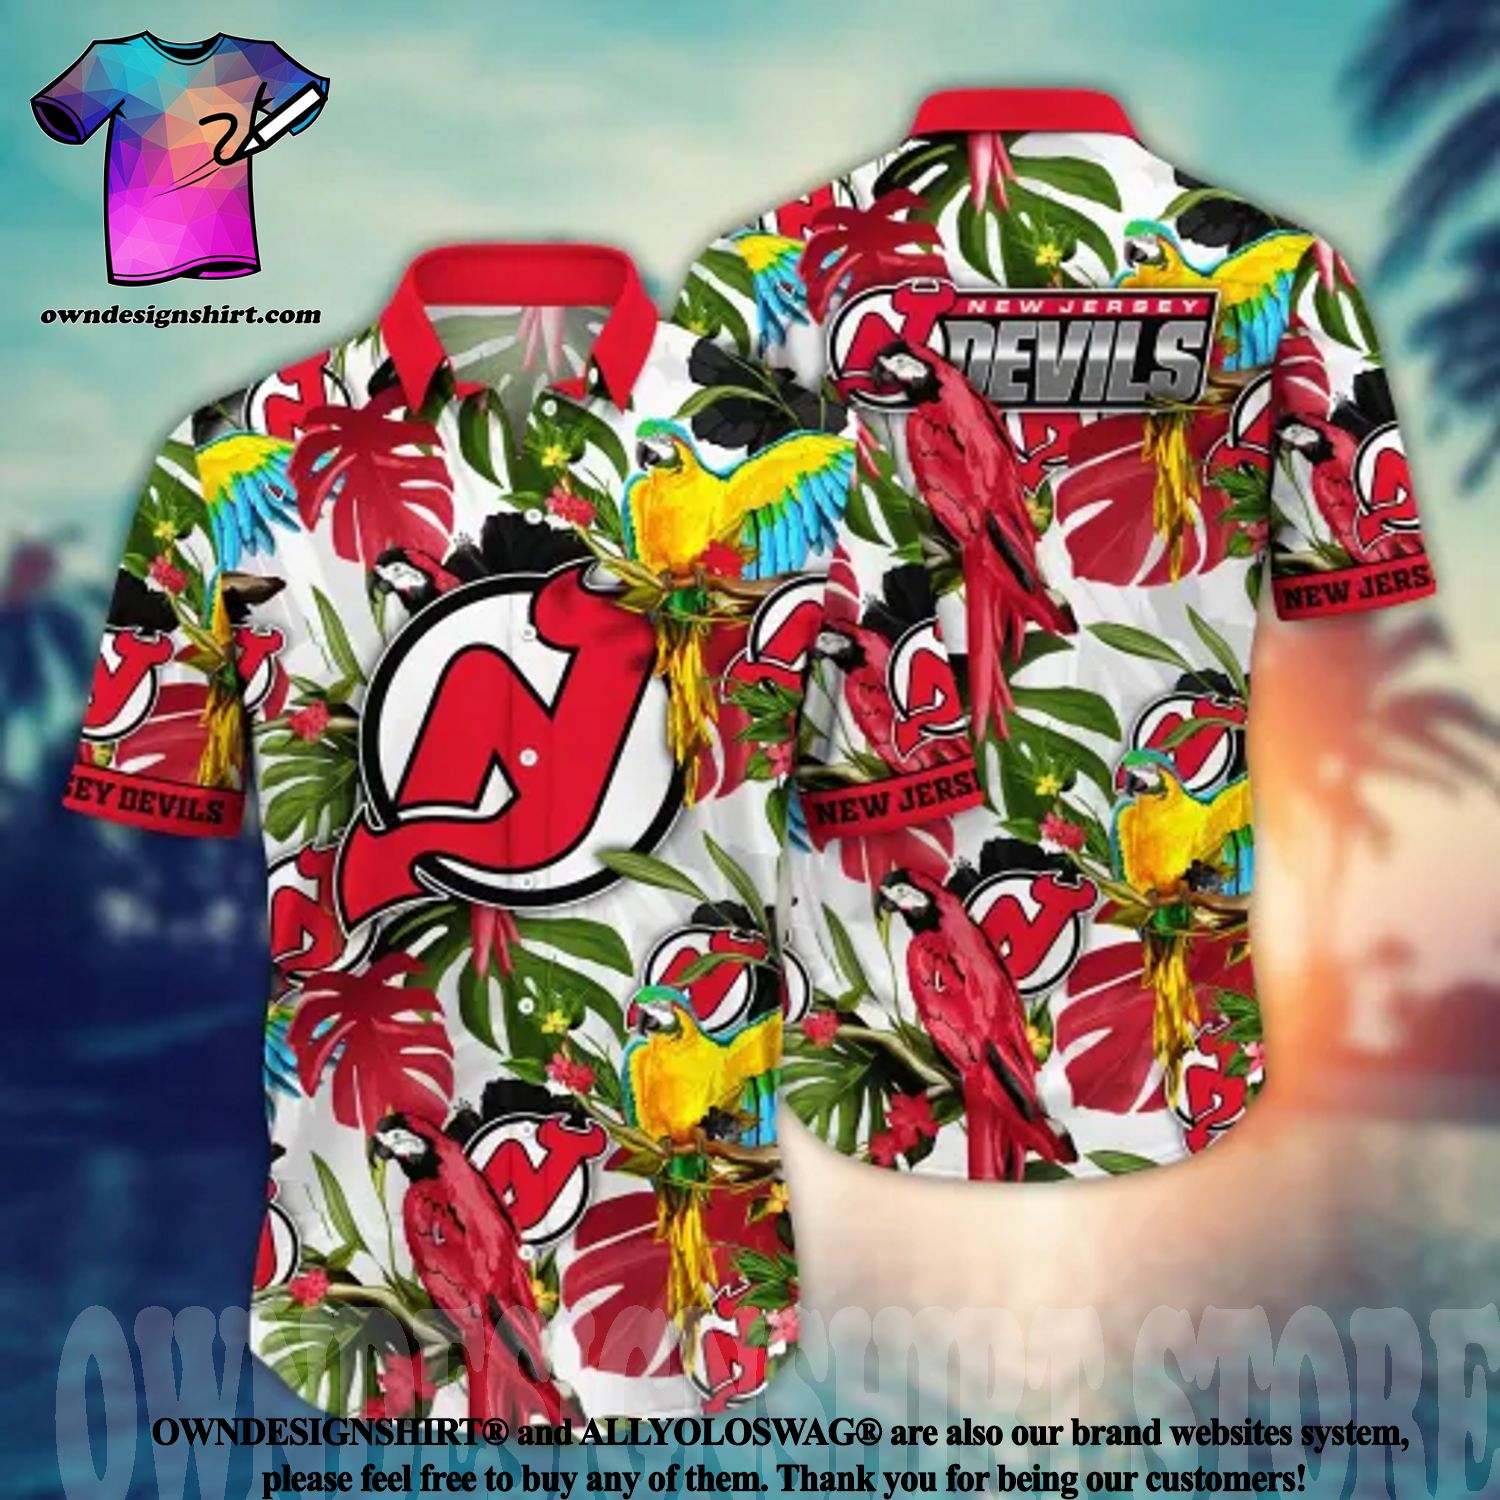 New Jersey Devils Sweatshirts on Sale, Devils Discounted